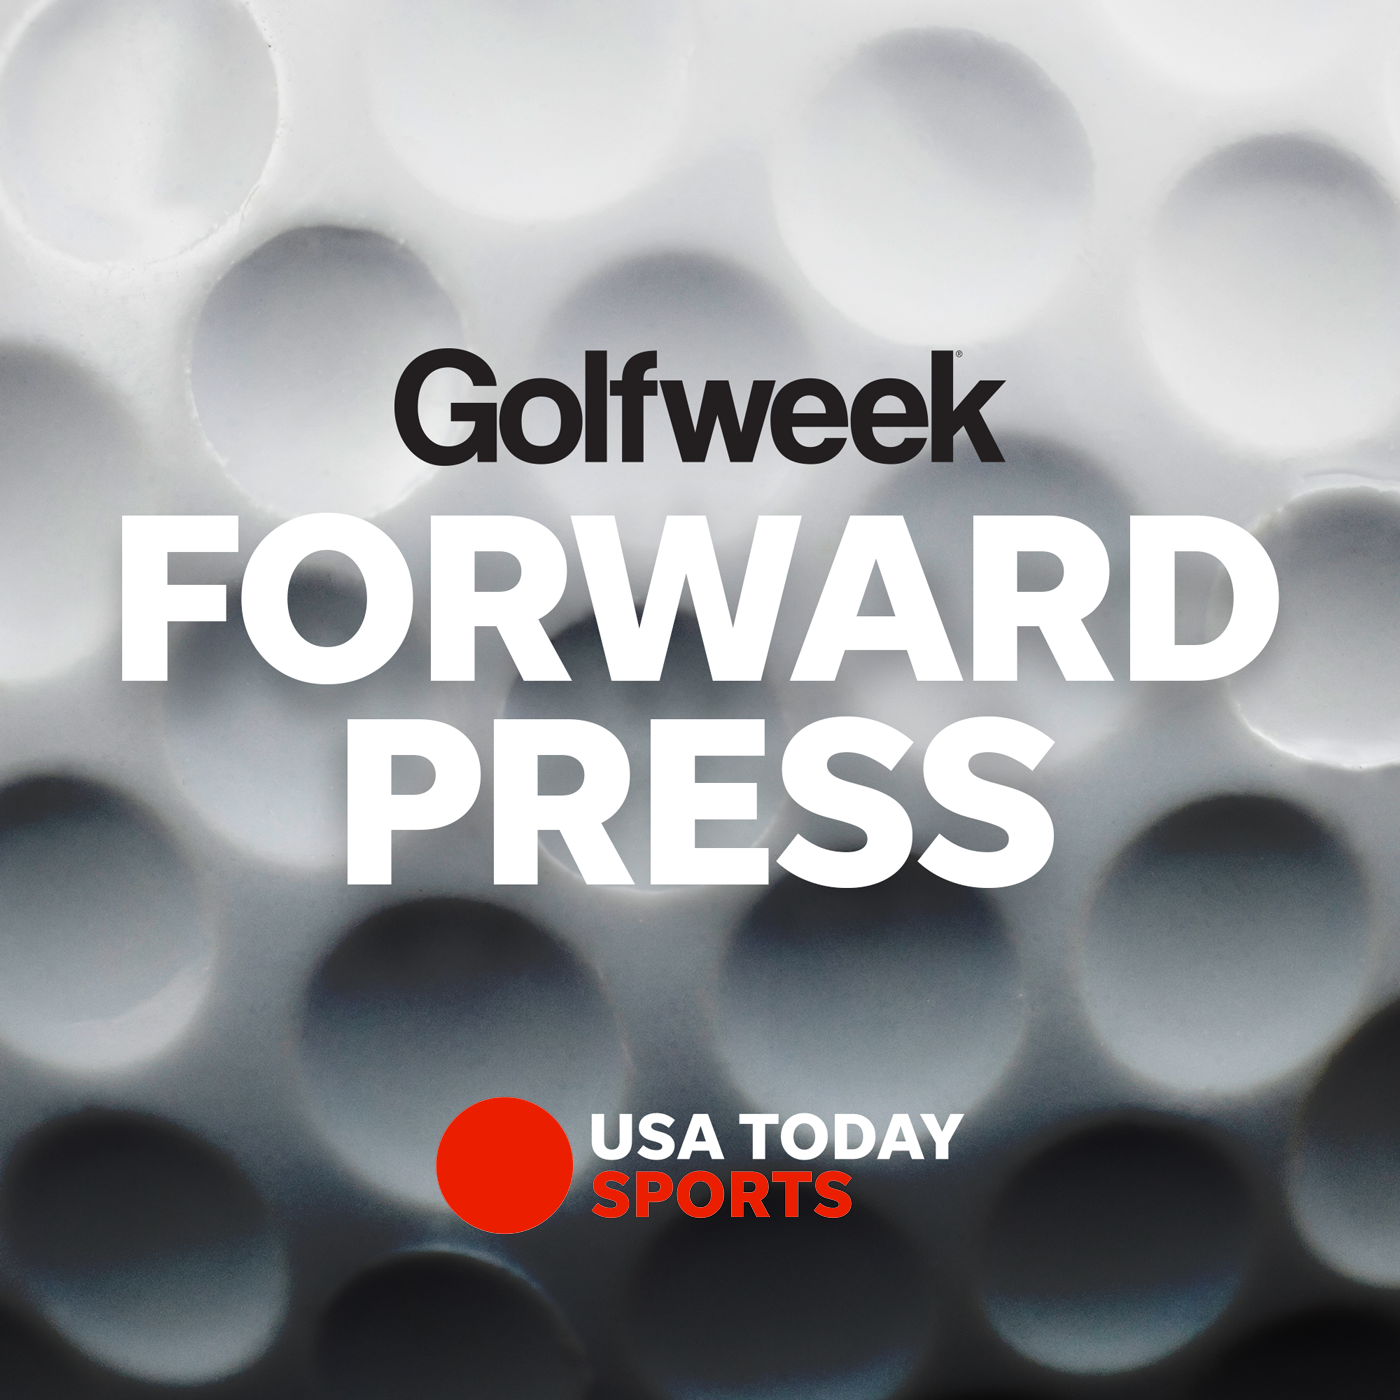 Golfweek Morning Update (June 3): Columbus plays two; Ryder Cup decision looming